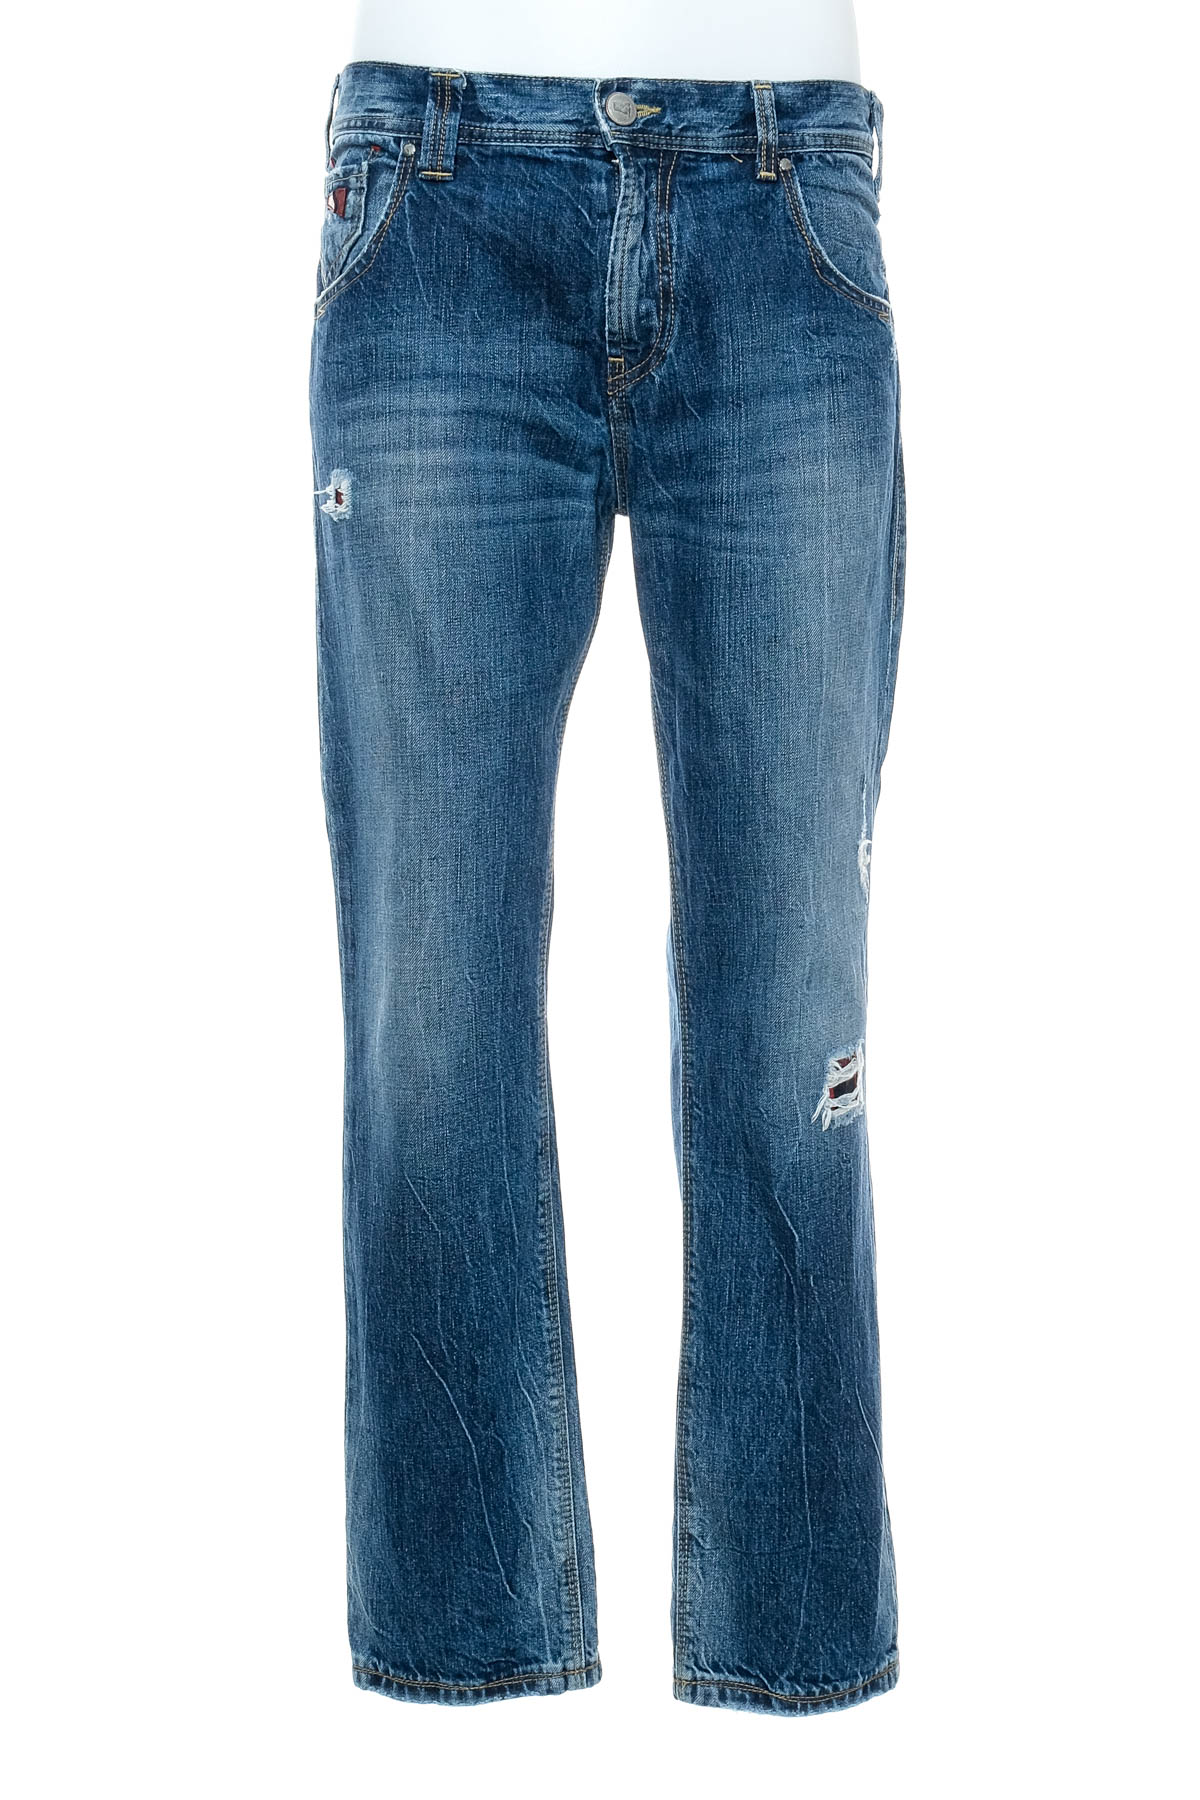 Men's jeans - Staff Jeans & Co. - 0